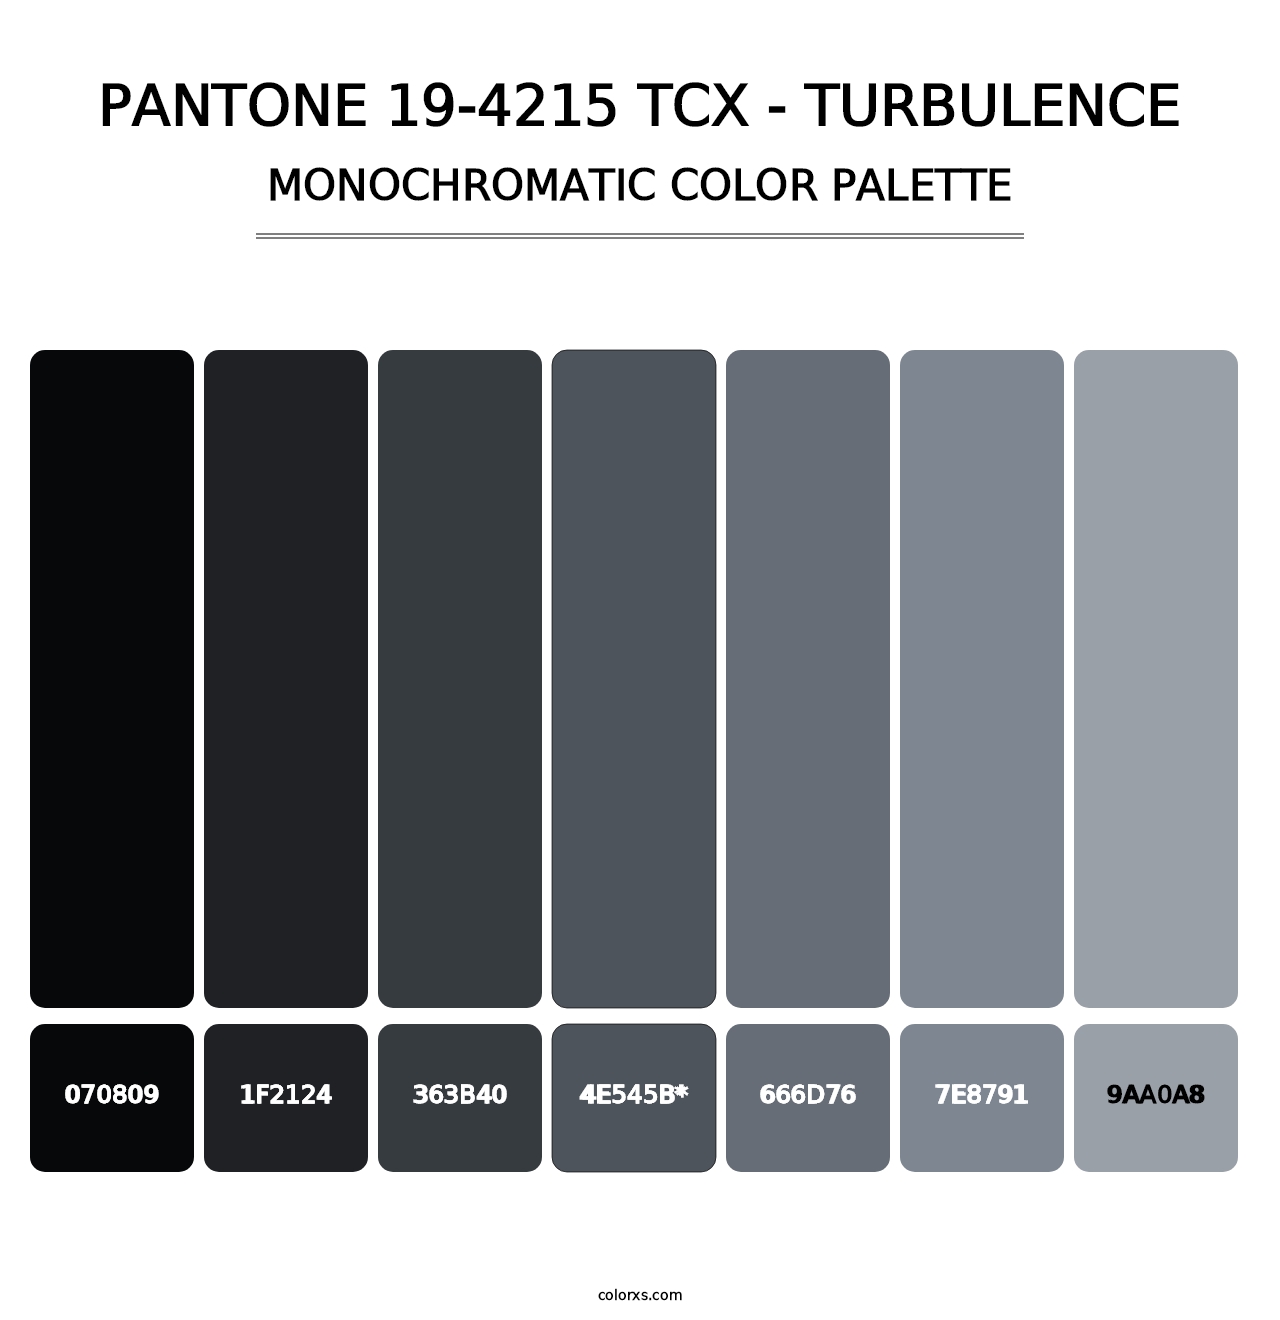 PANTONE 19-4215 TCX - Turbulence - Monochromatic Color Palette